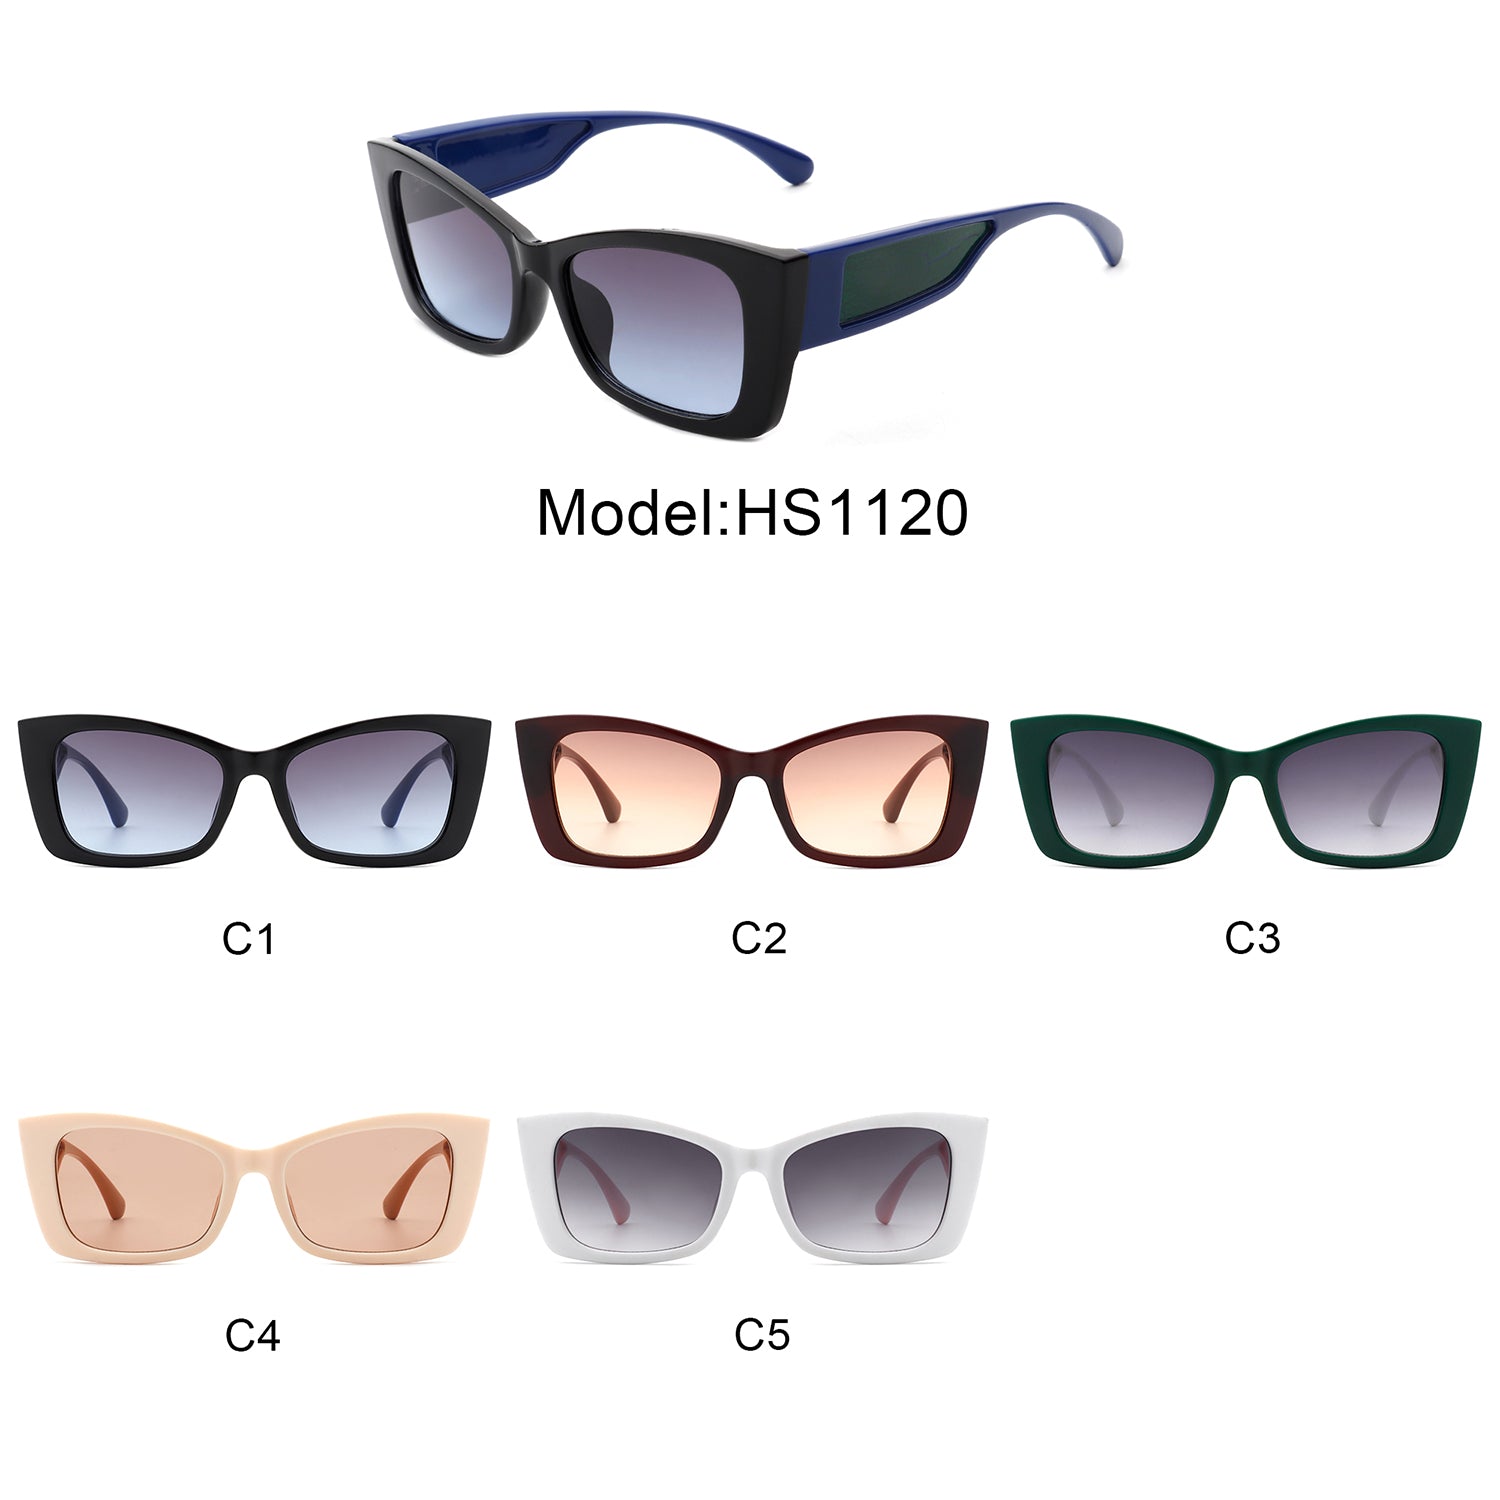 chanel rectangle sunglasses 5430